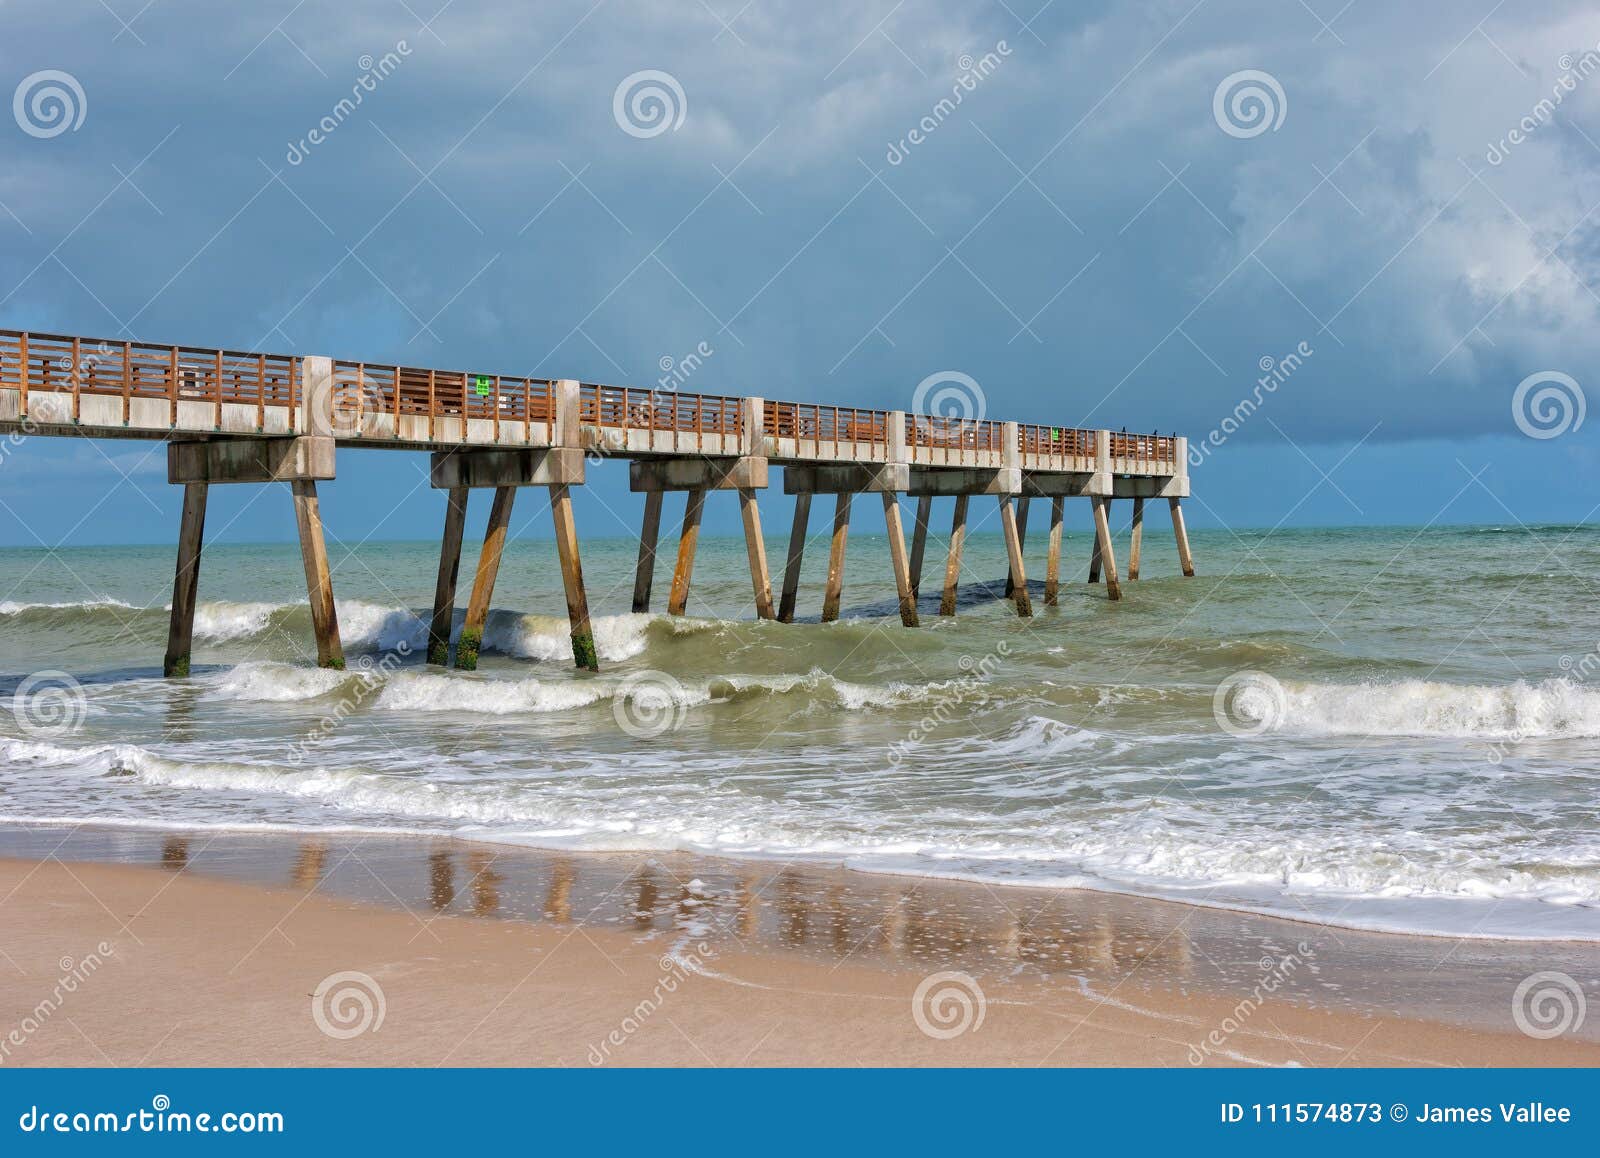 pier near jaycee park in vero beach florida